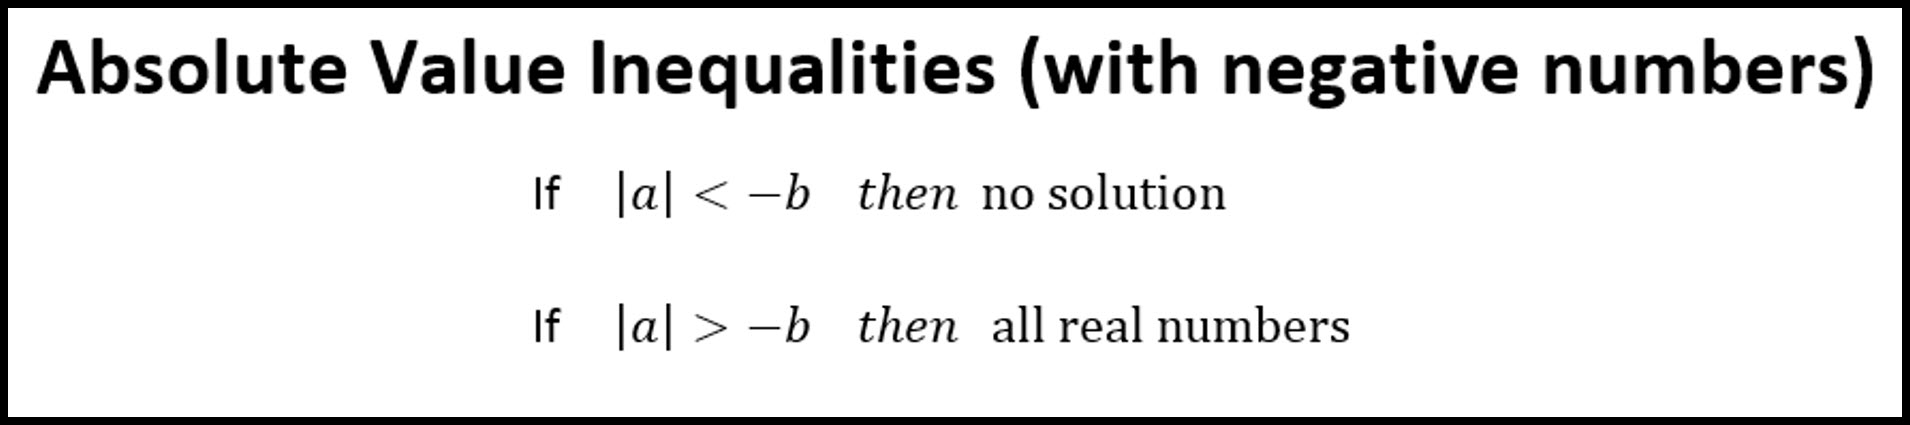 Negative Numbers in Absolute Value Inequalities